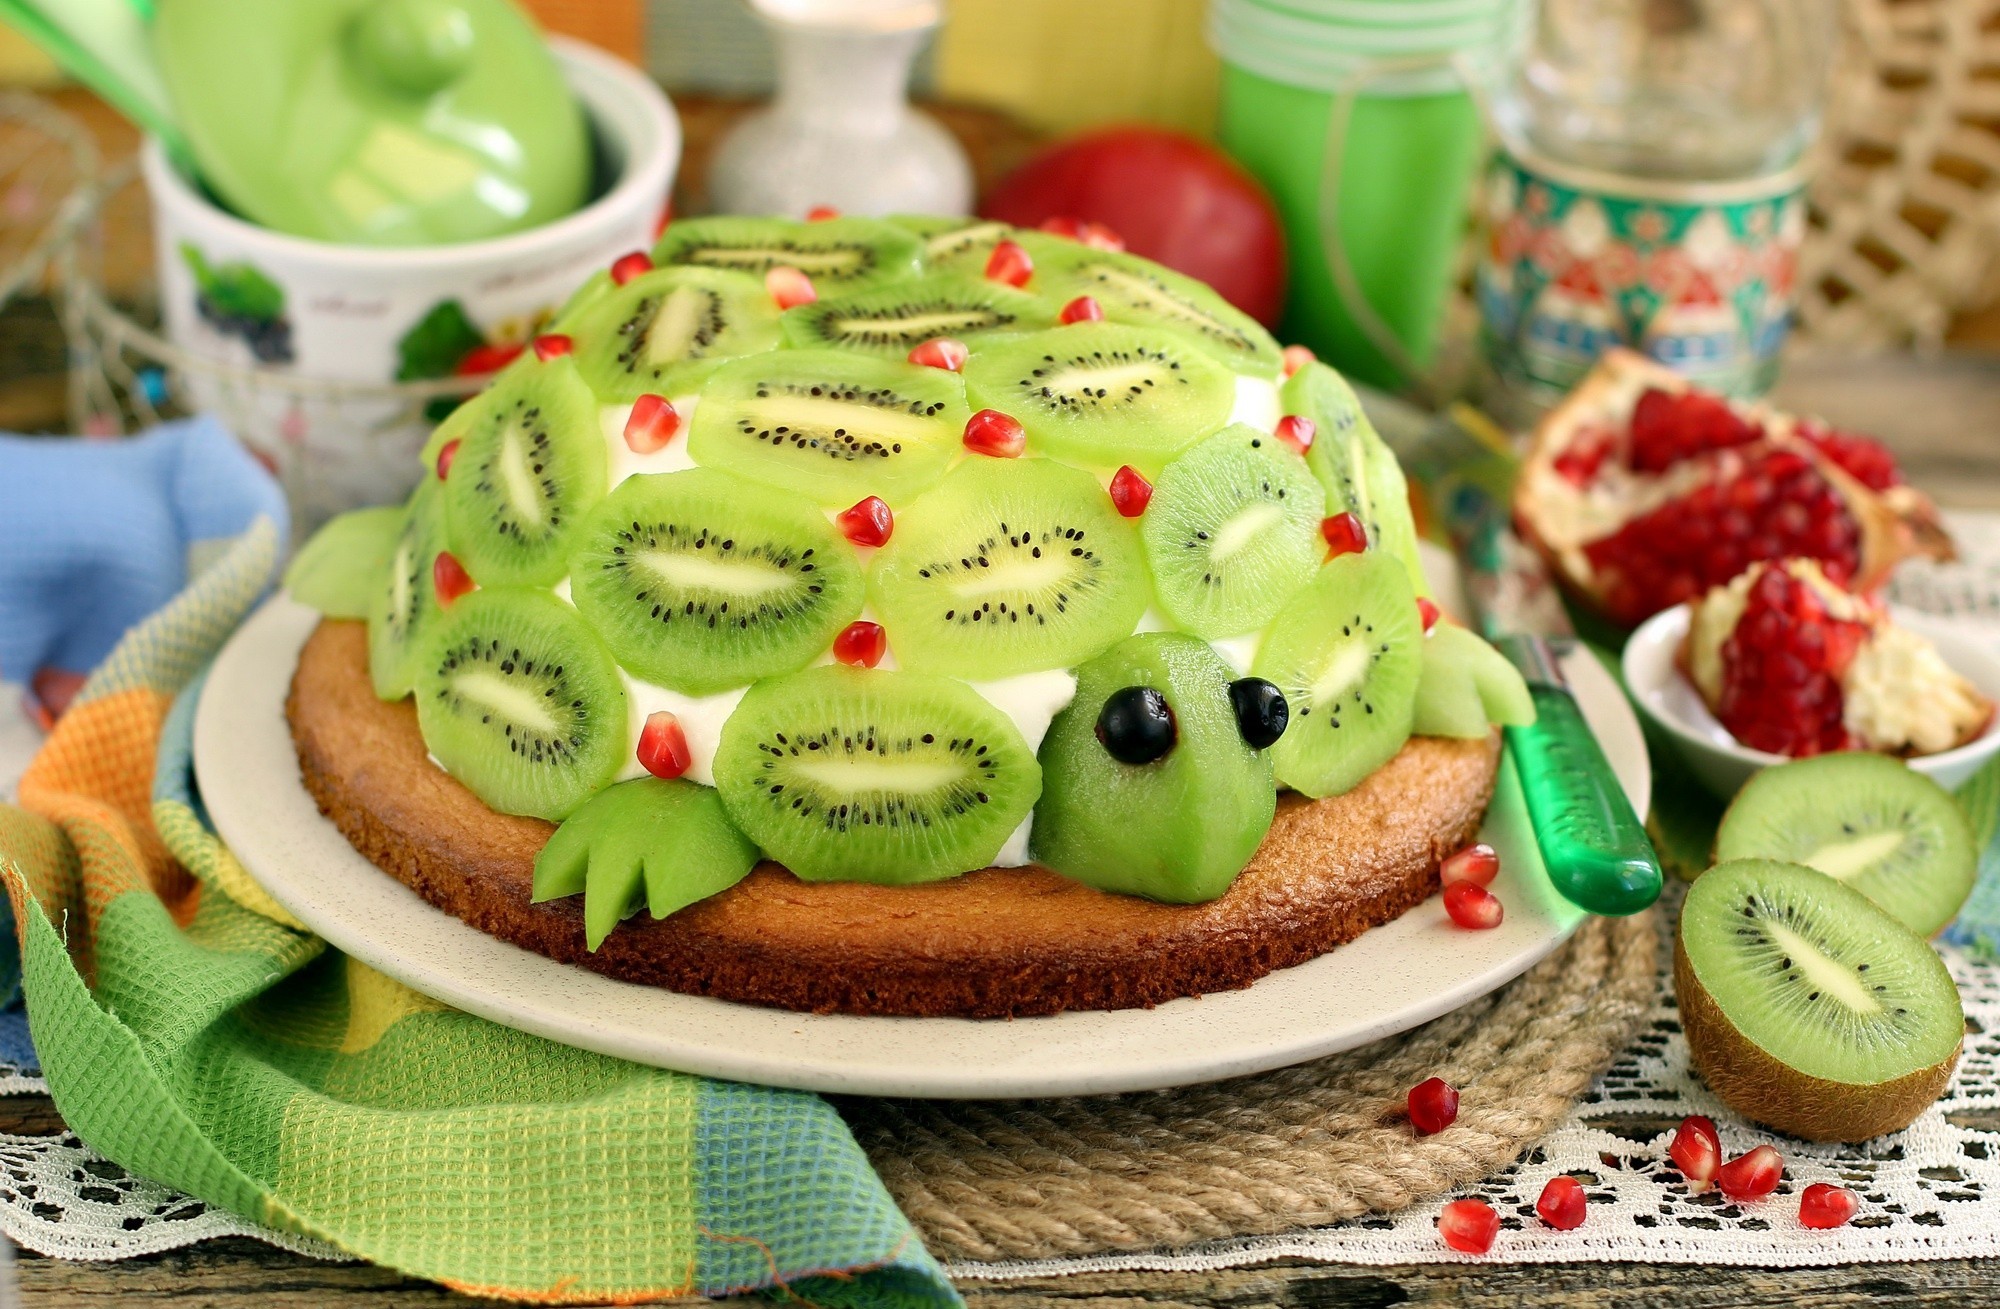 General 2000x1309 kiwi (fruit) fruit food cake dessert creativity still life